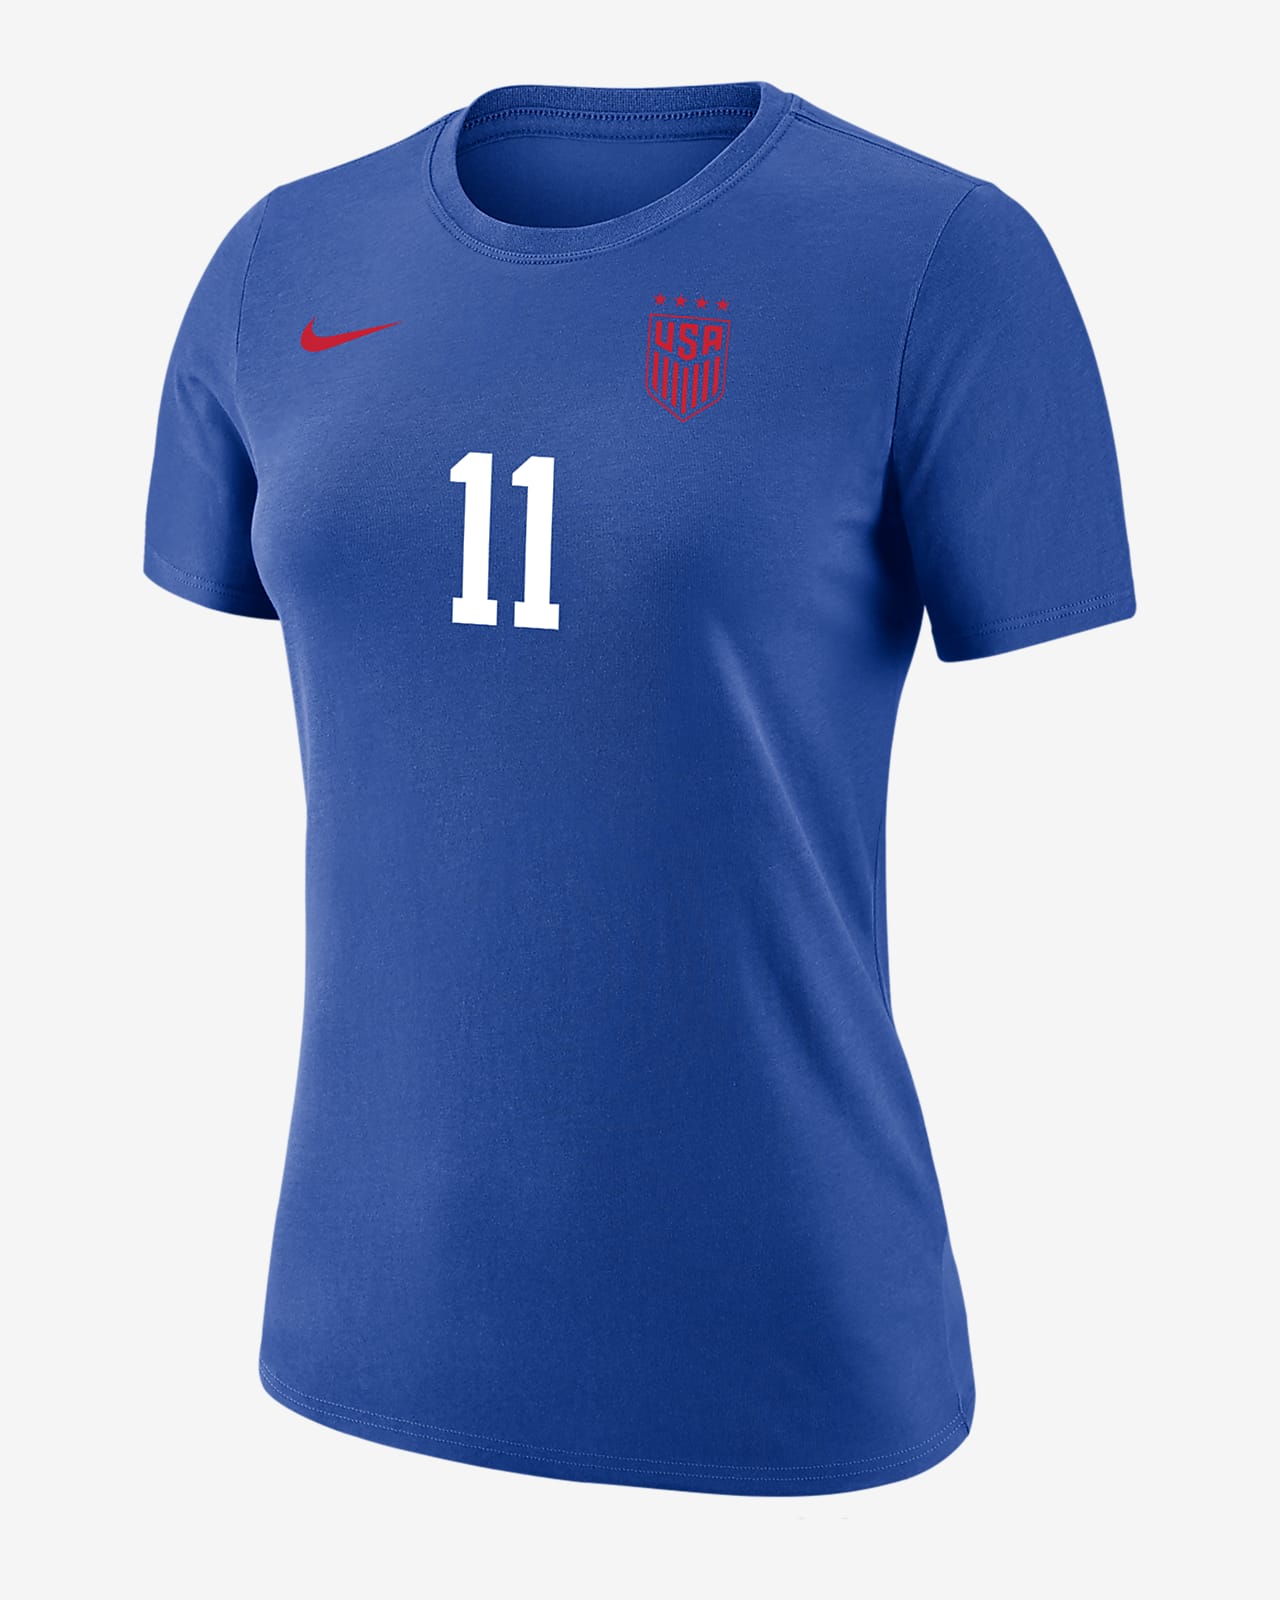 Sophia Smith USWNT Women's Nike Soccer T-Shirt